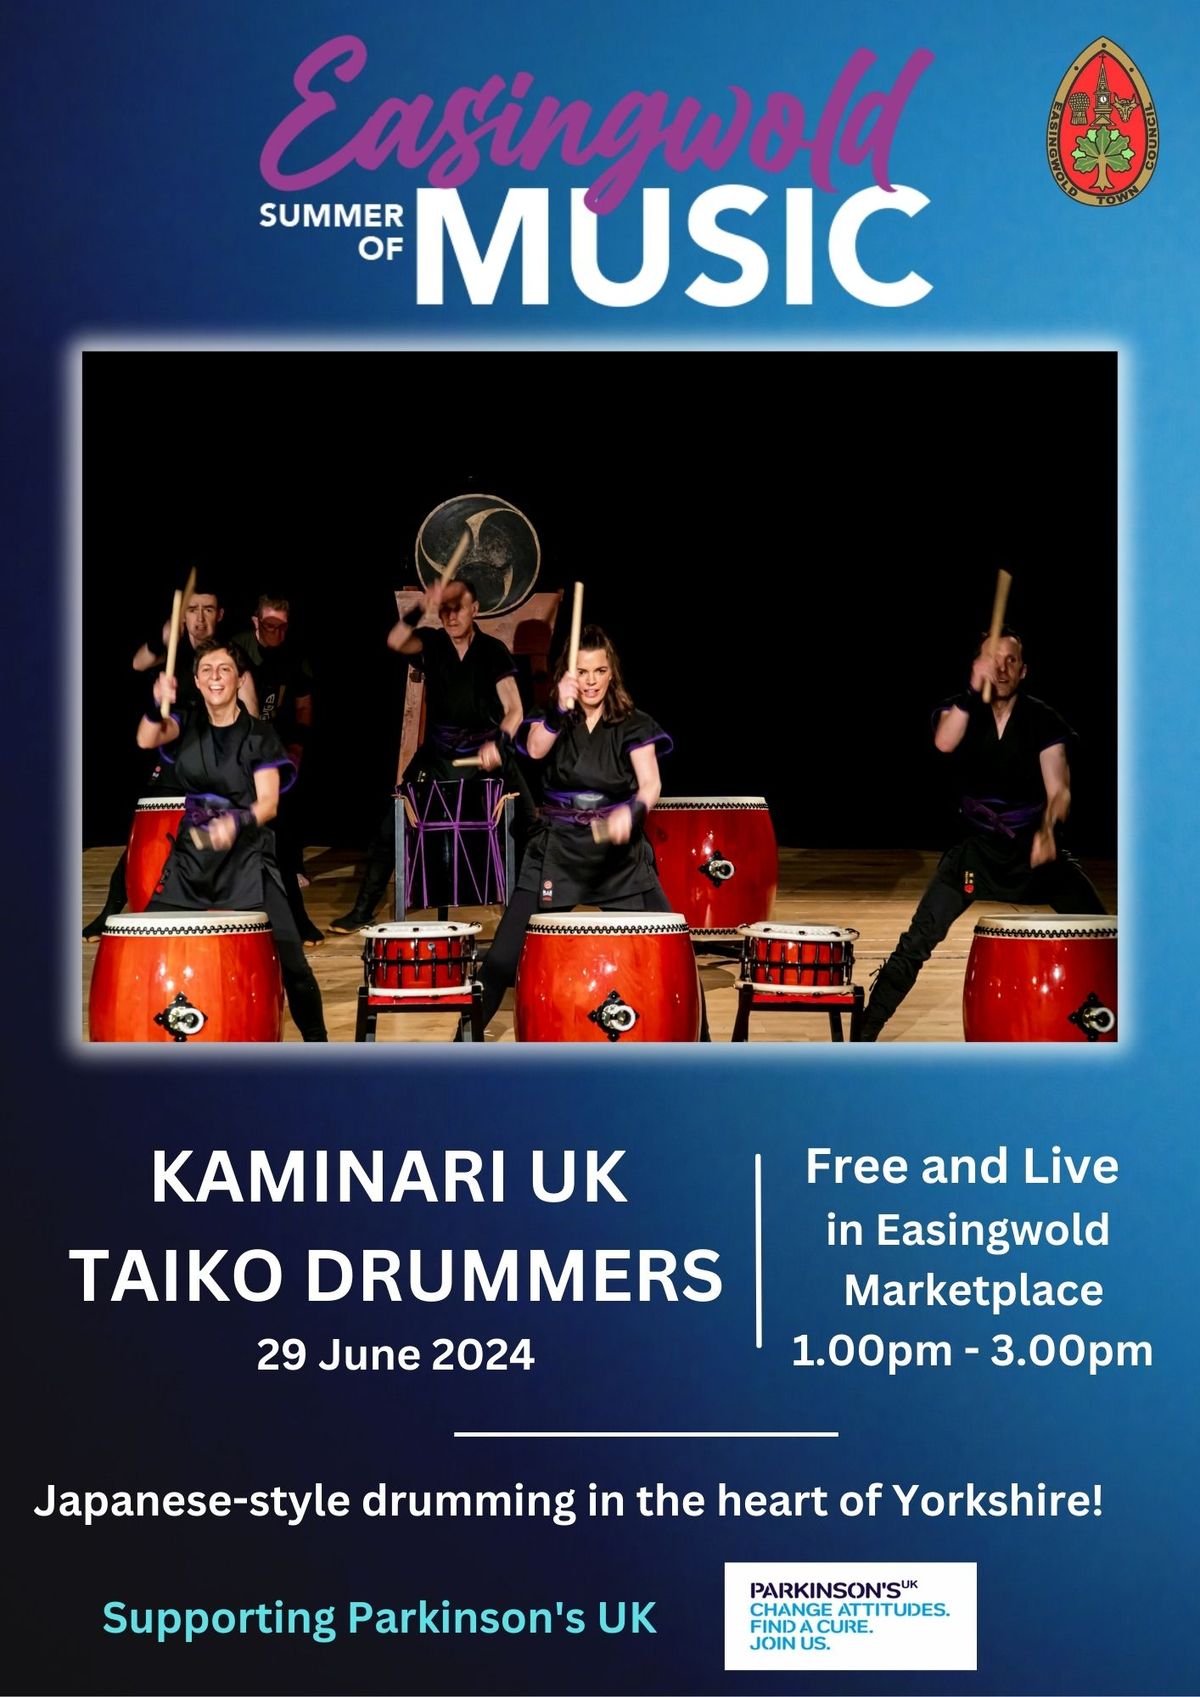 Easingwold Summer of Music - Kaminari UK Taiko Drummers